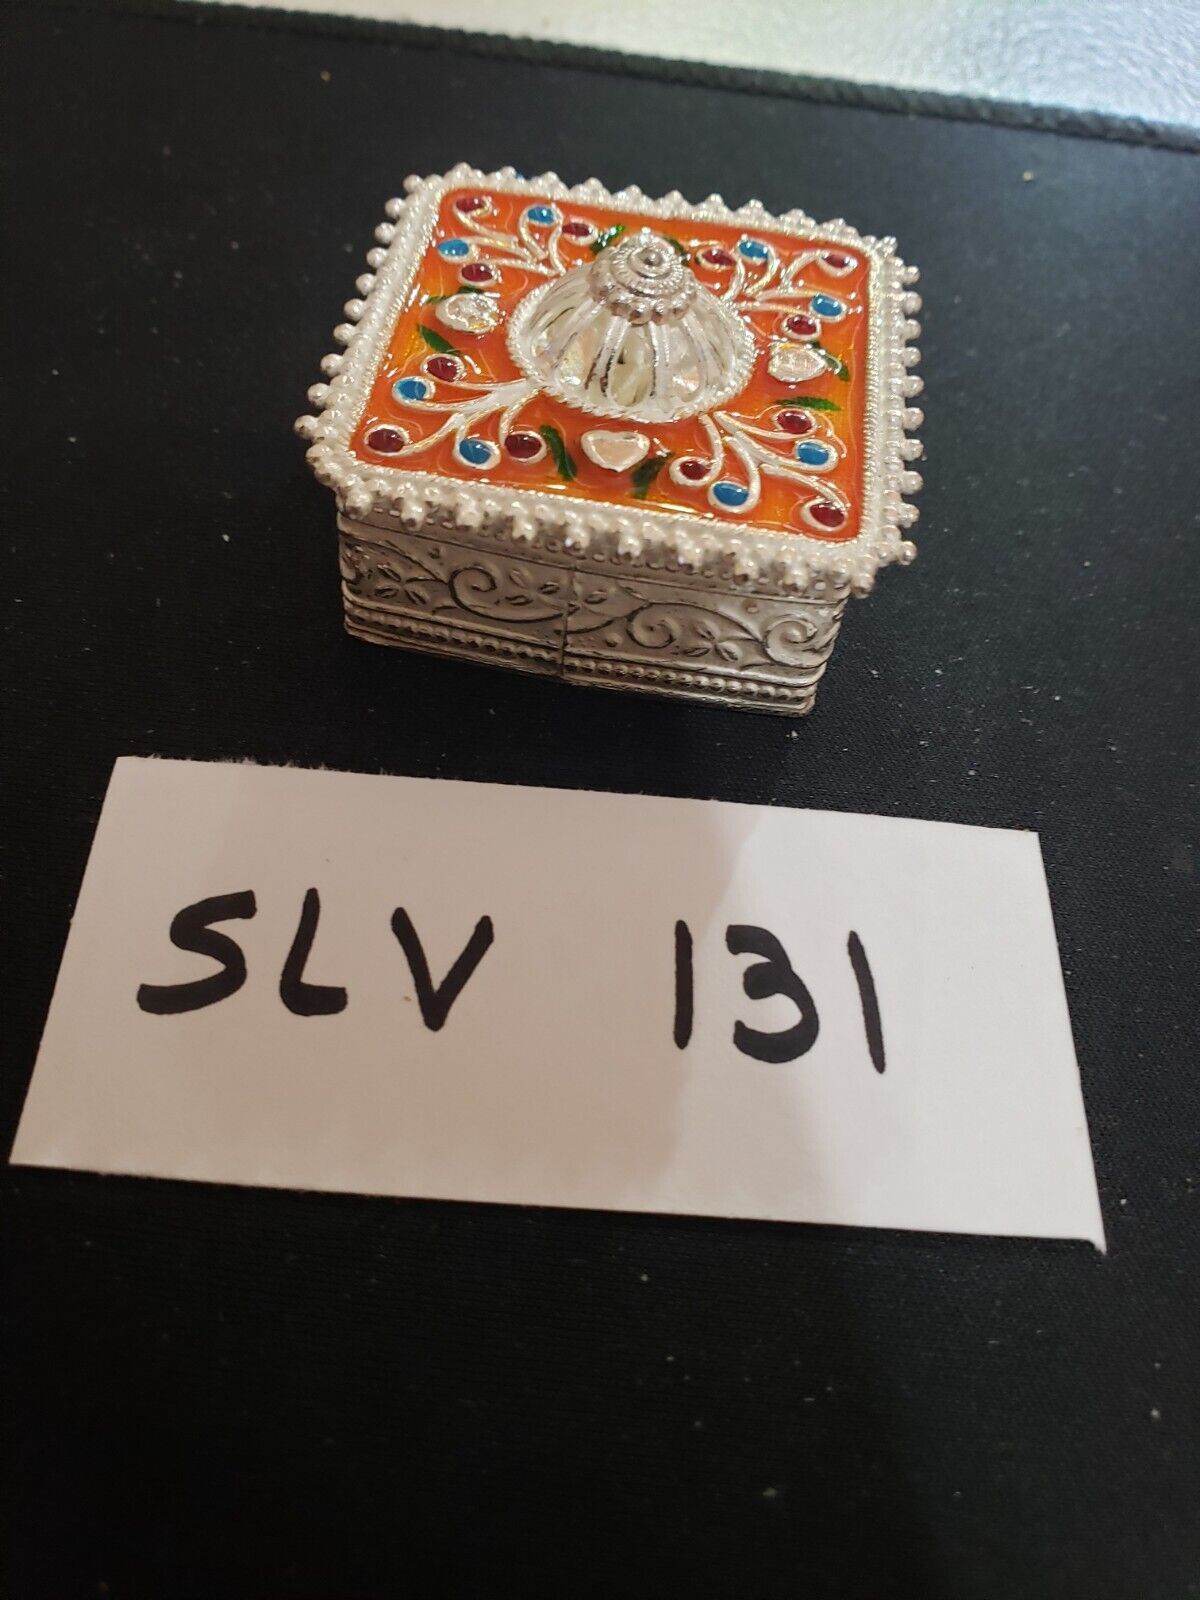 SLV 131 1 3/4x 1 3/4x5/8 98 % silver pill/small item storage box flowers/pearls